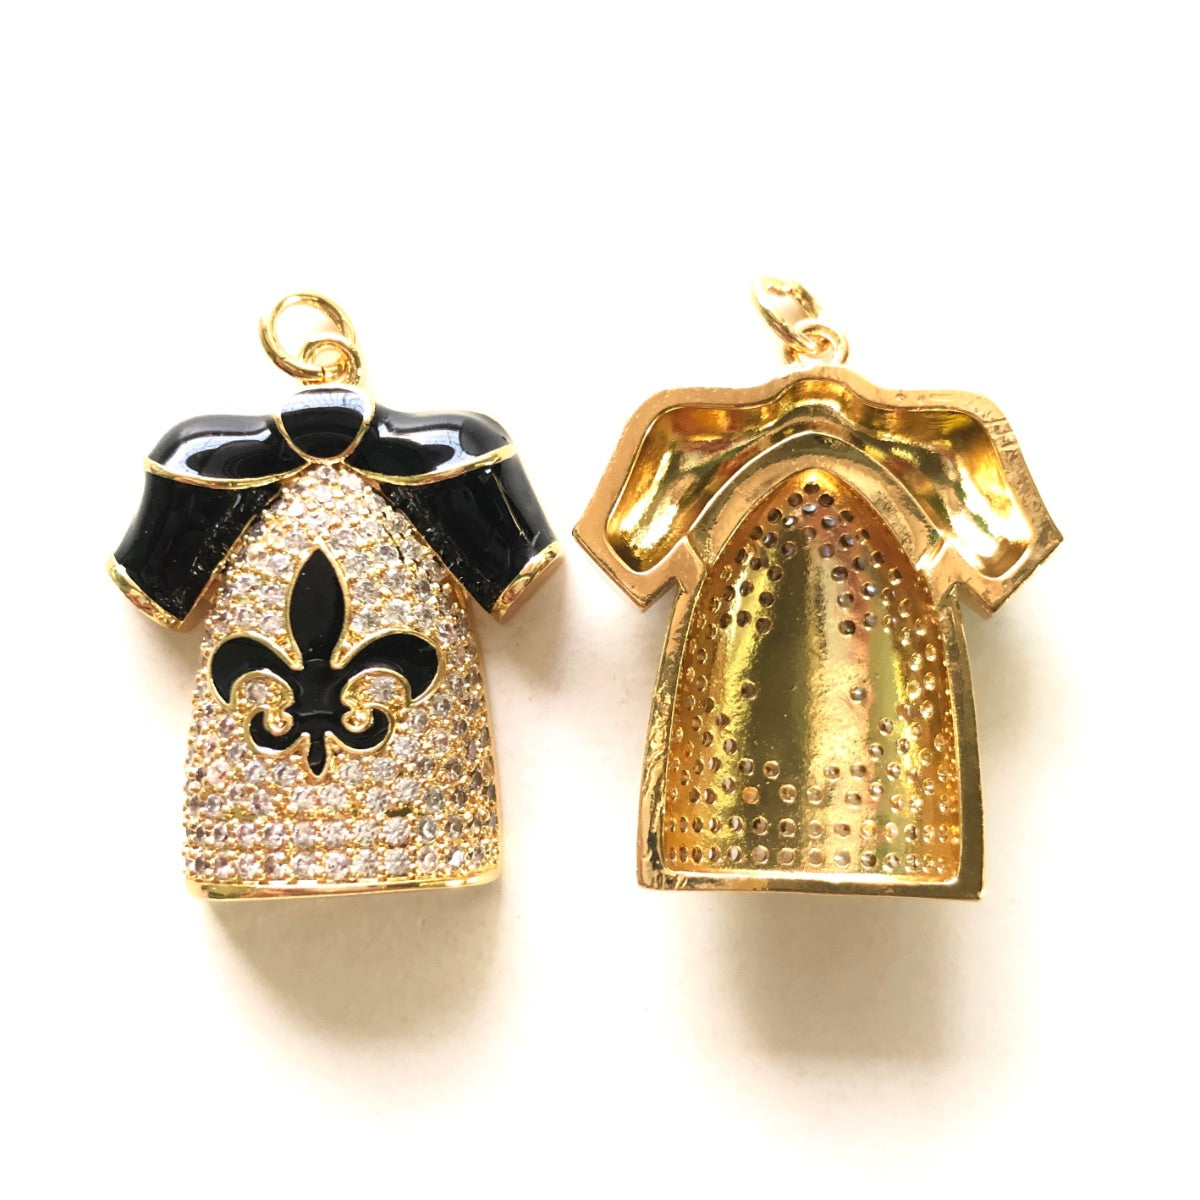 10pcs/lot 33*27mm Fleur De Lis CZ Saints Football Uniform Suit Jersey Charms CZ Paved Charms American Football Sports Louisiana Inspired New Charms Arrivals Charms Beads Beyond